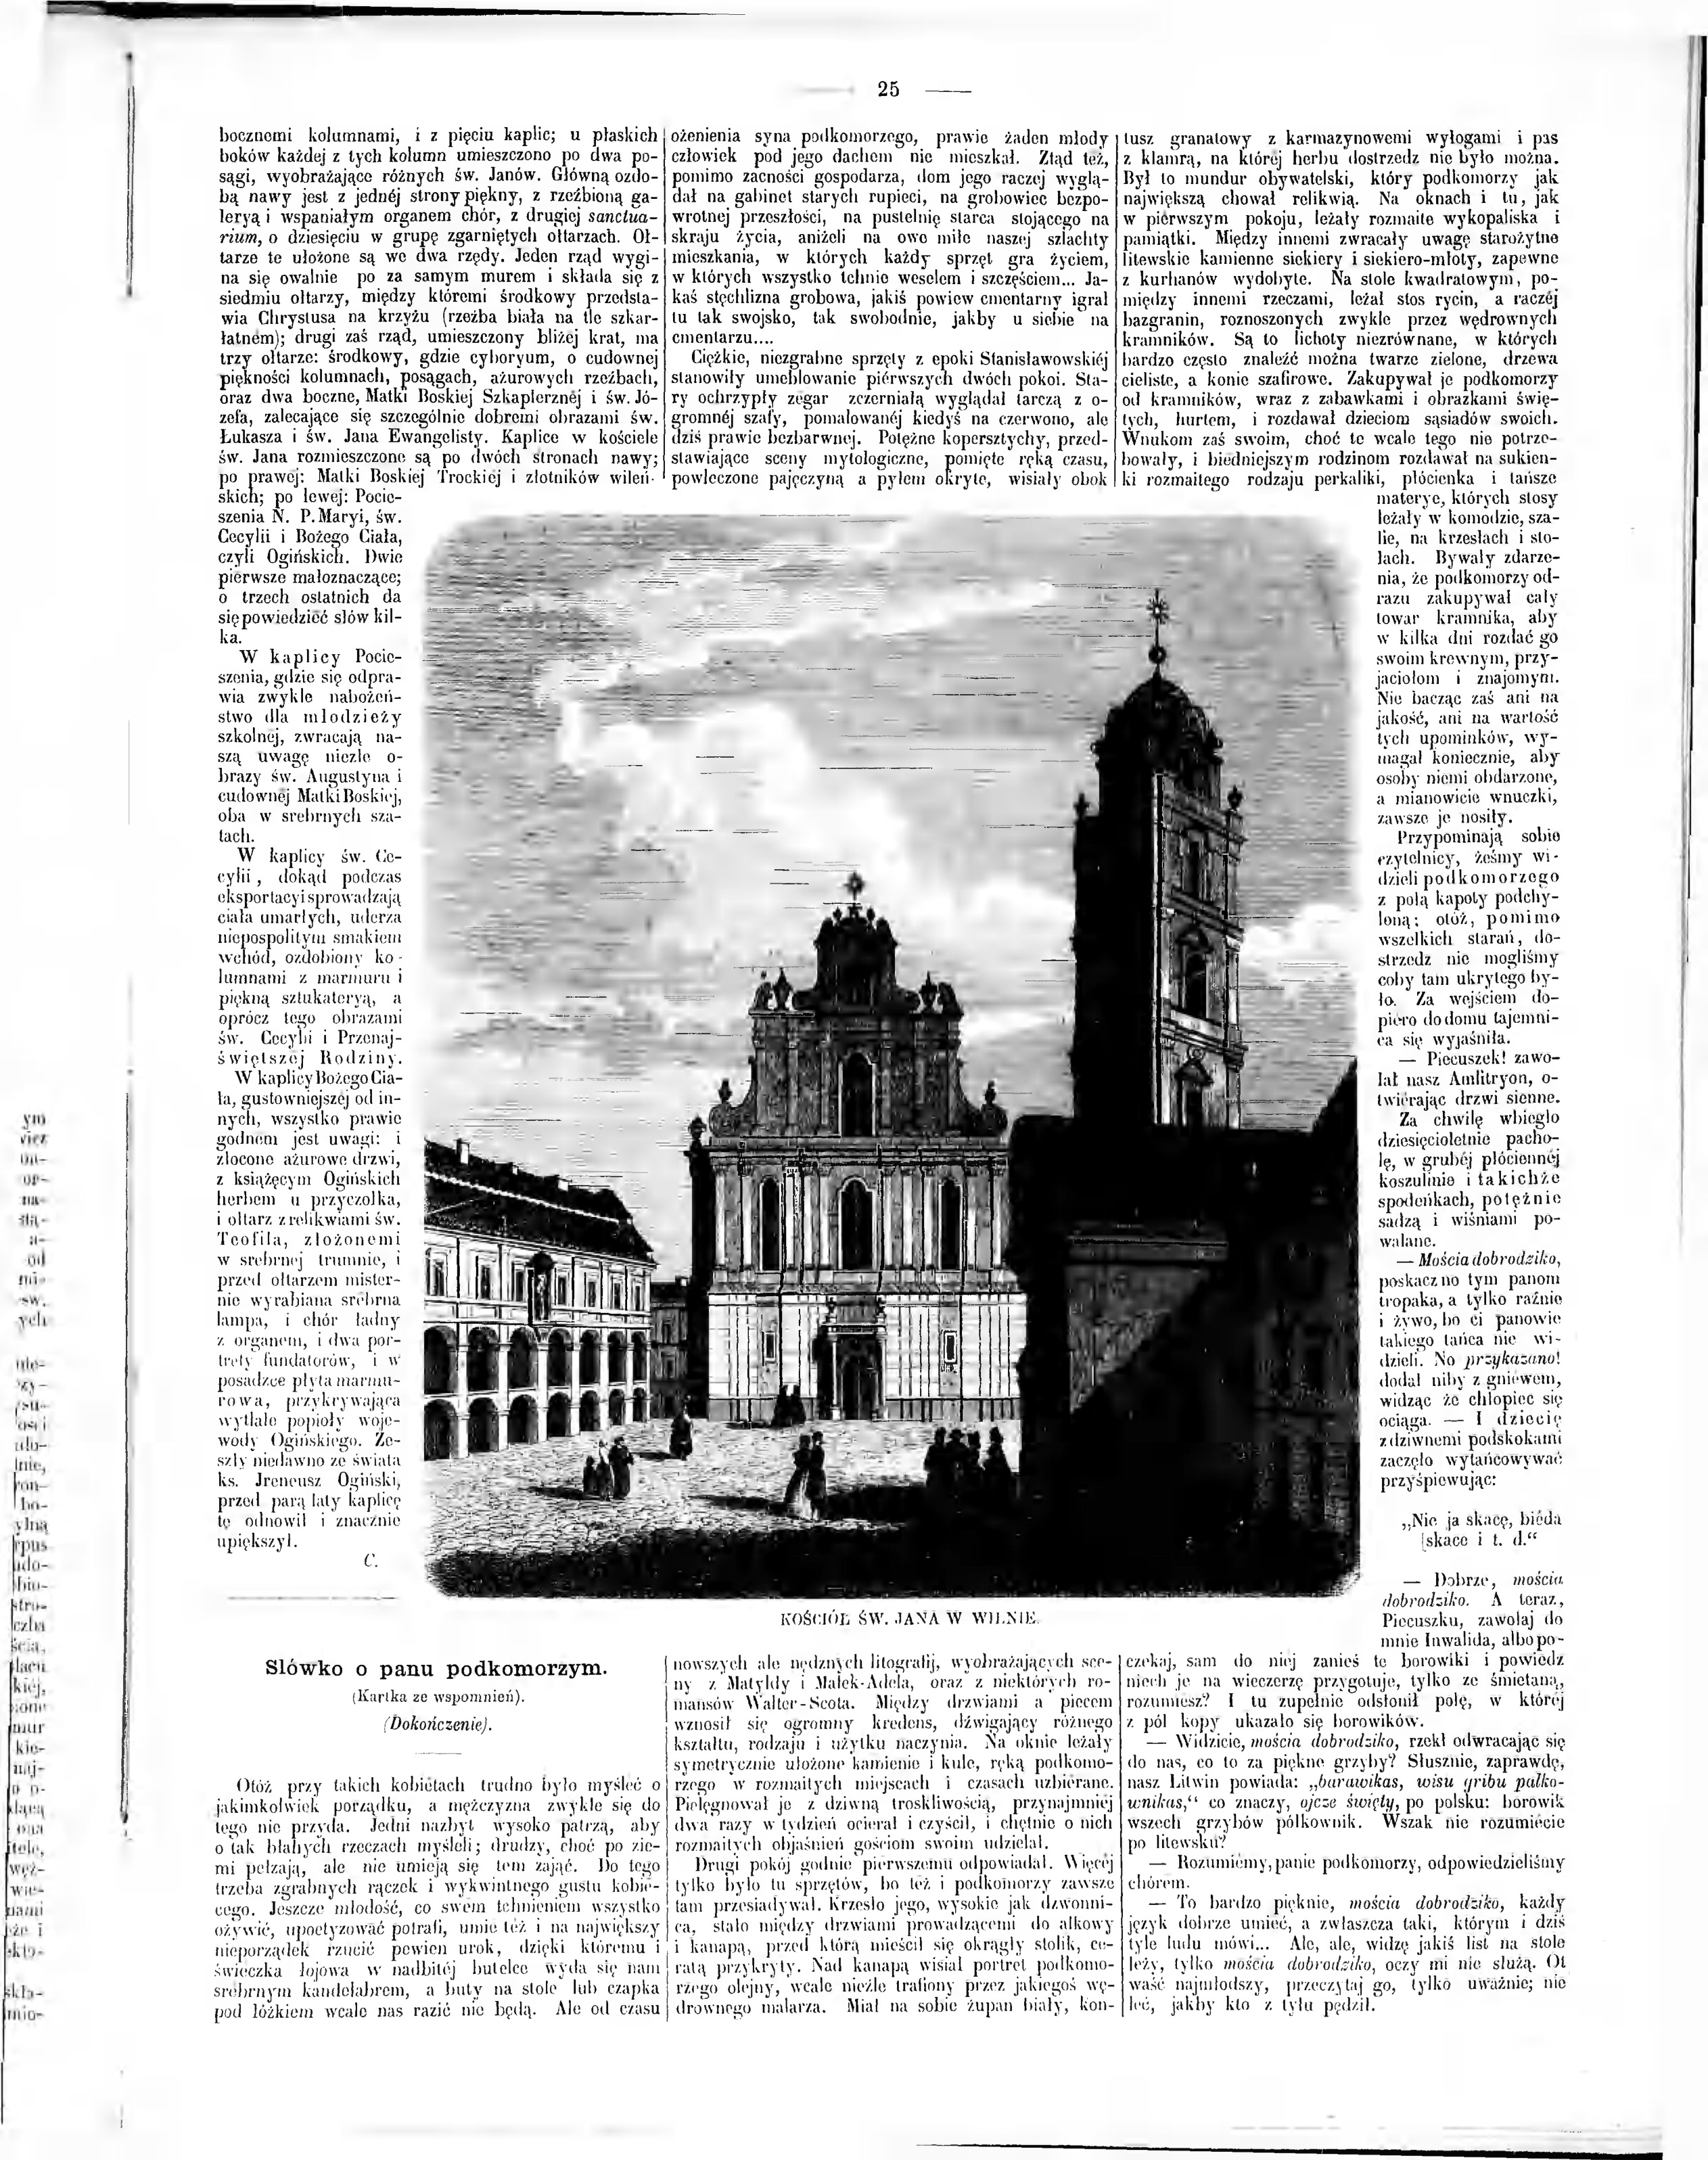 Fotografia przedstawiająca Description of St John\'s Church in Vilnius